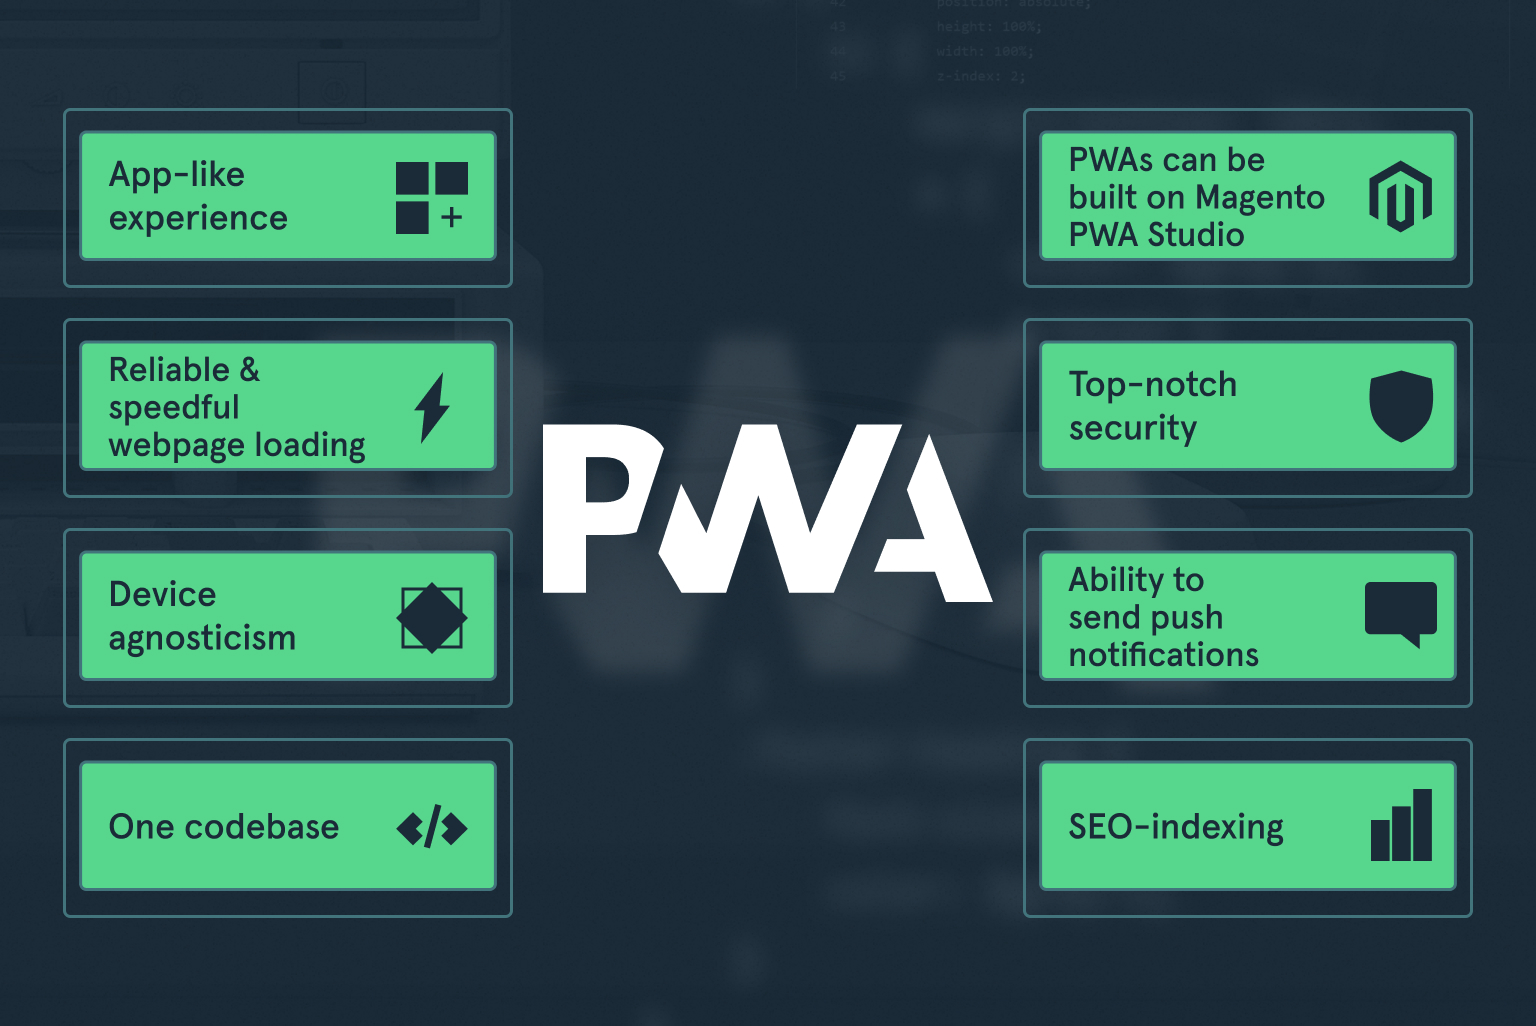 PWA features